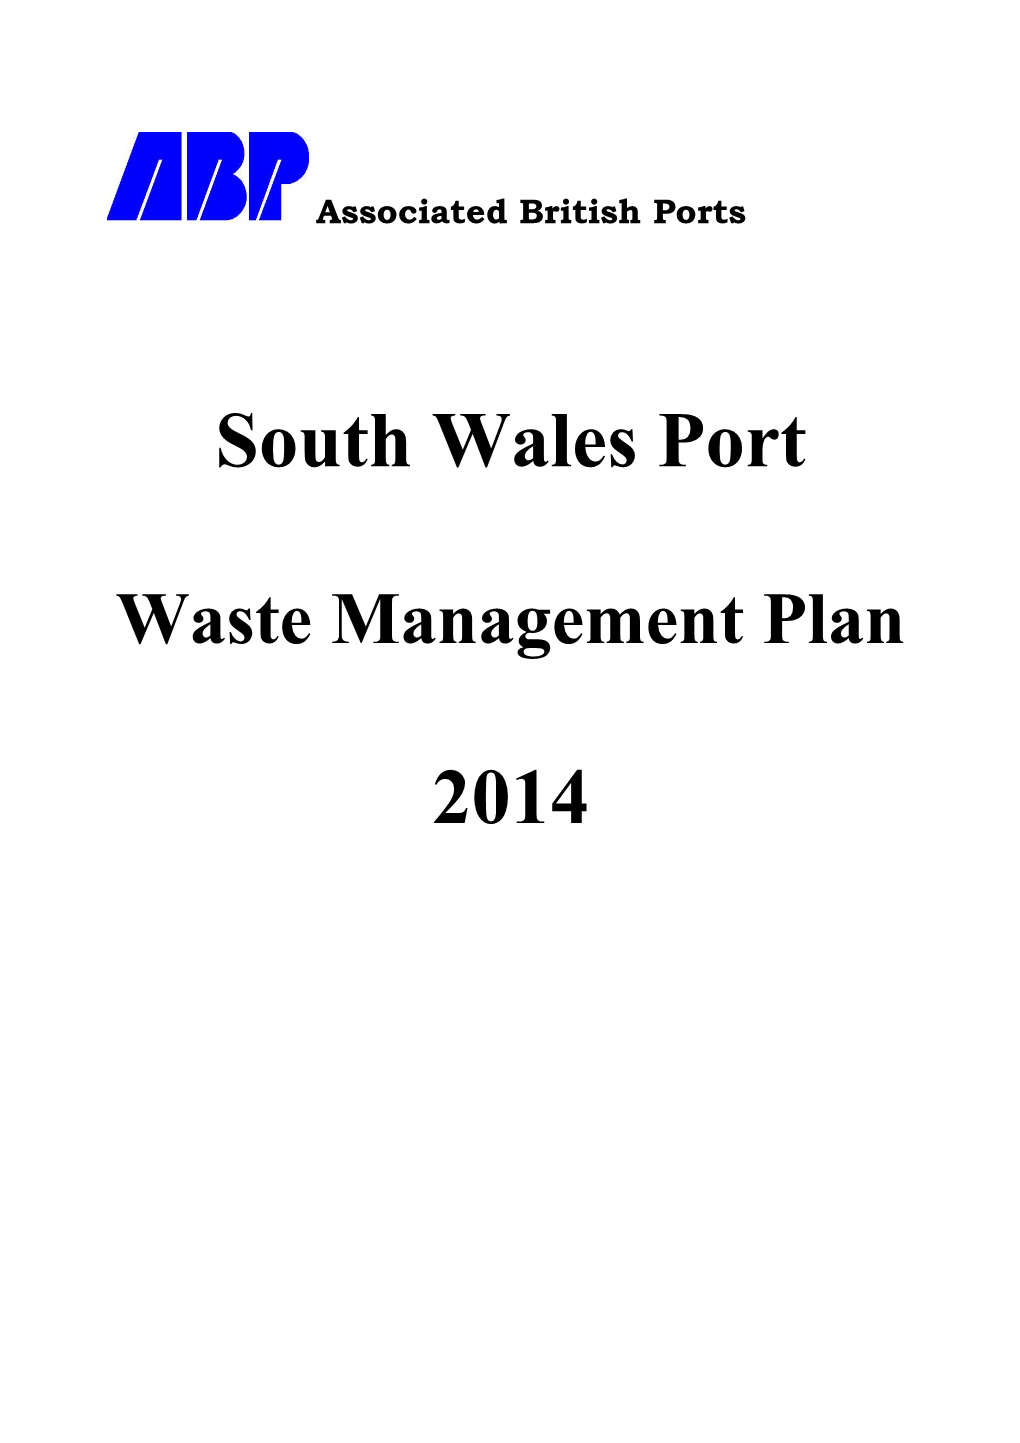 SW Port Waste Management Plan 2014